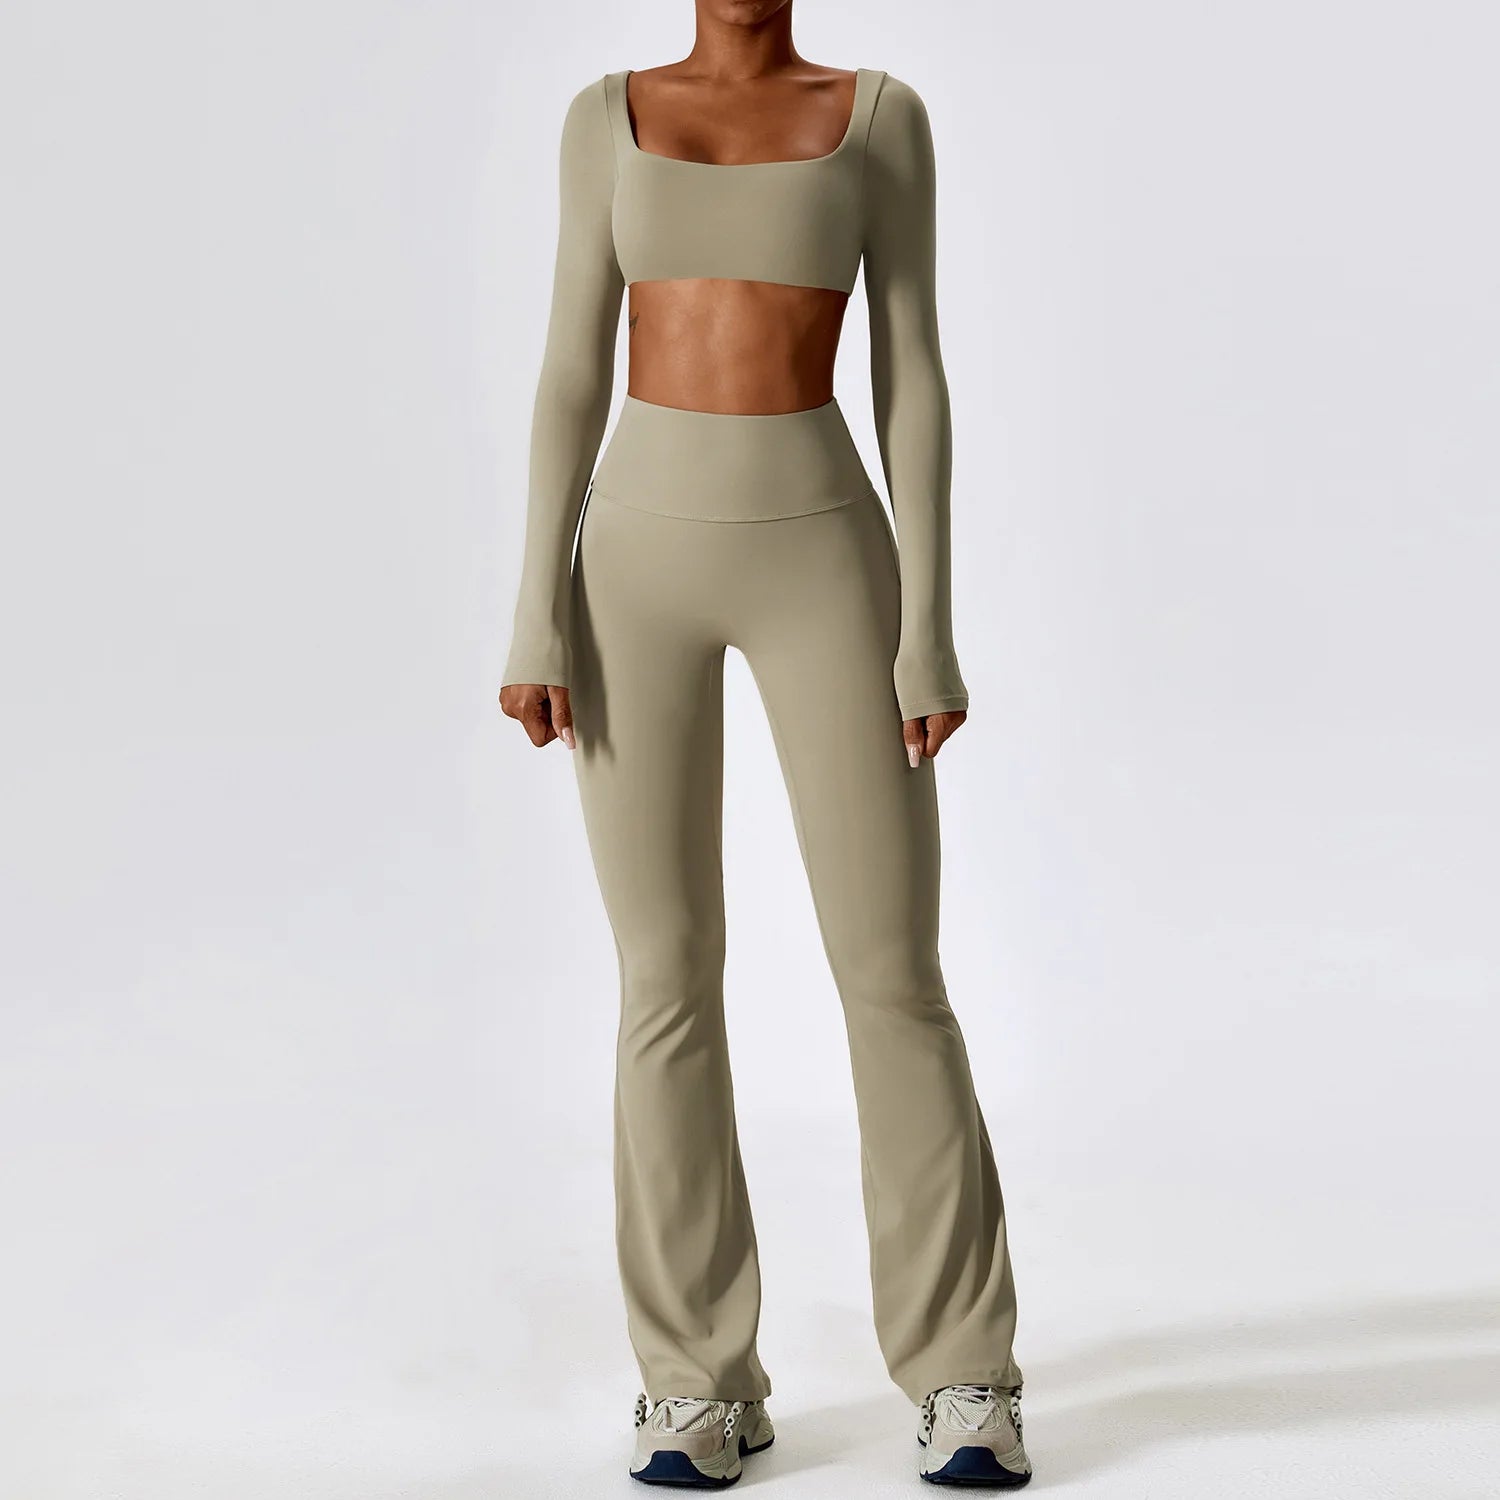 Yoga Set 2PCS Seamless Women Sportswear Workout Clothes Athletic Wear